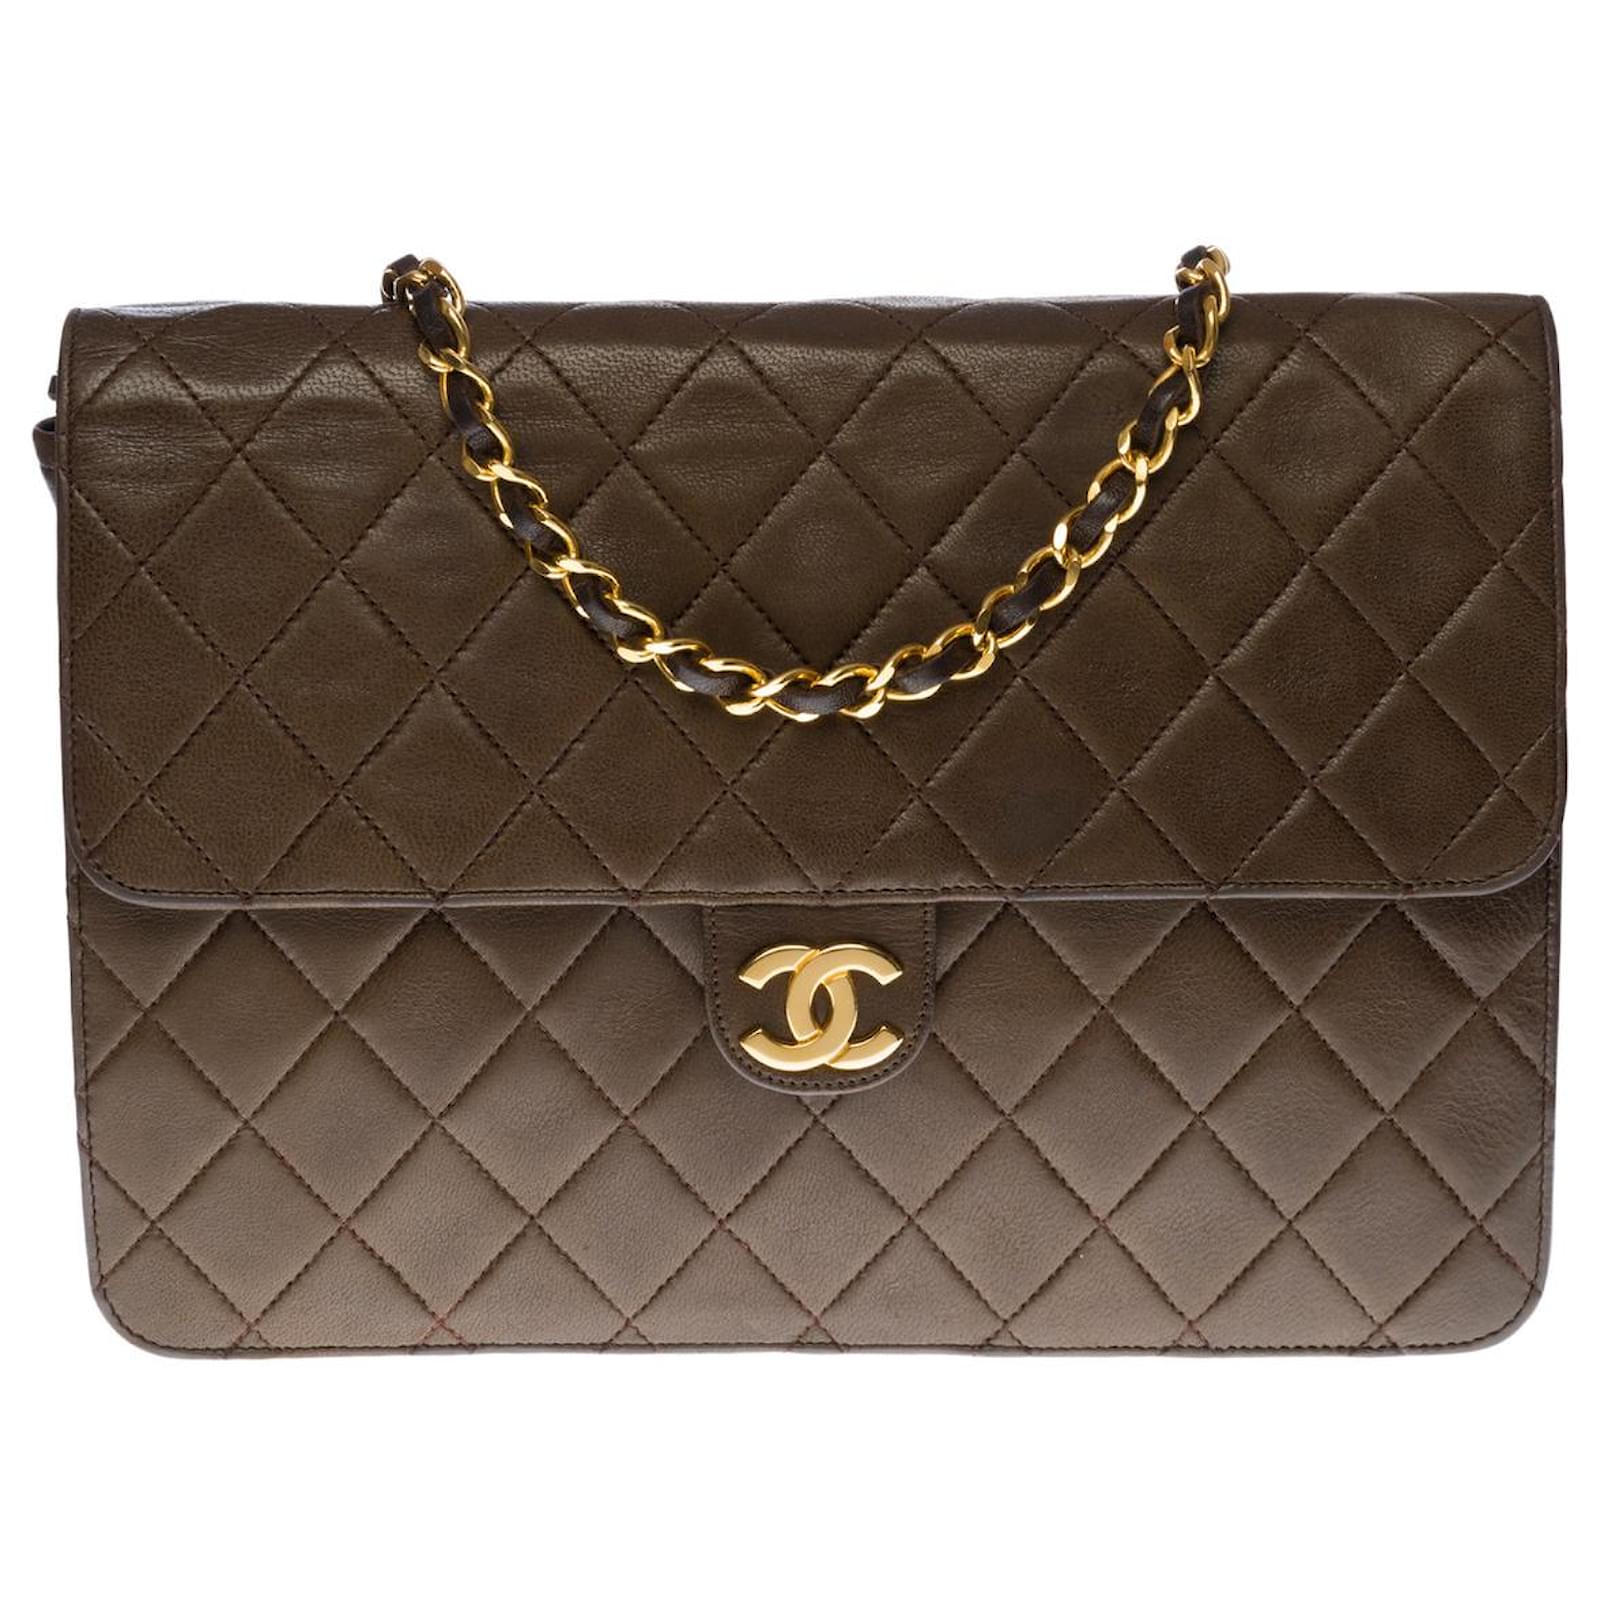 Chanel Silver Embossed Precious Symbols Single Flap Bag